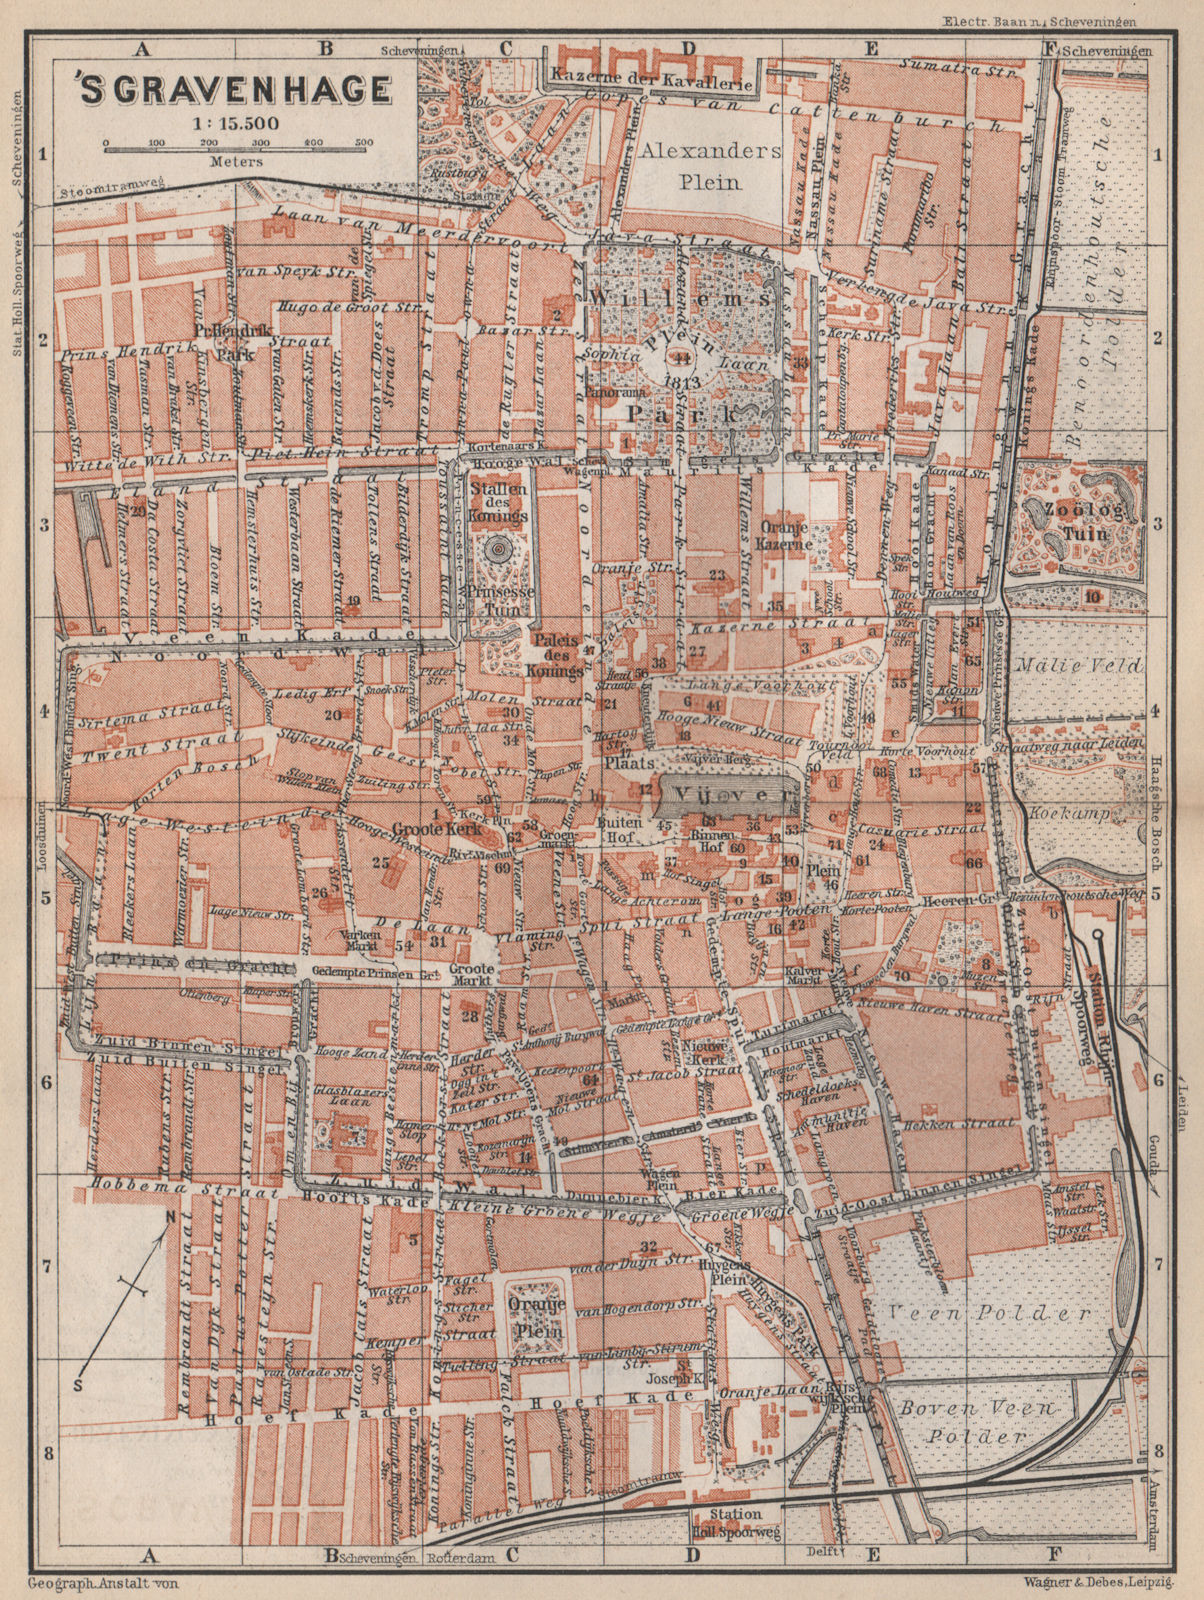 THE HAGUE DEN HAAG 'S-GRAVENHAGE town city stadsplan. Netherlands 1897 old map